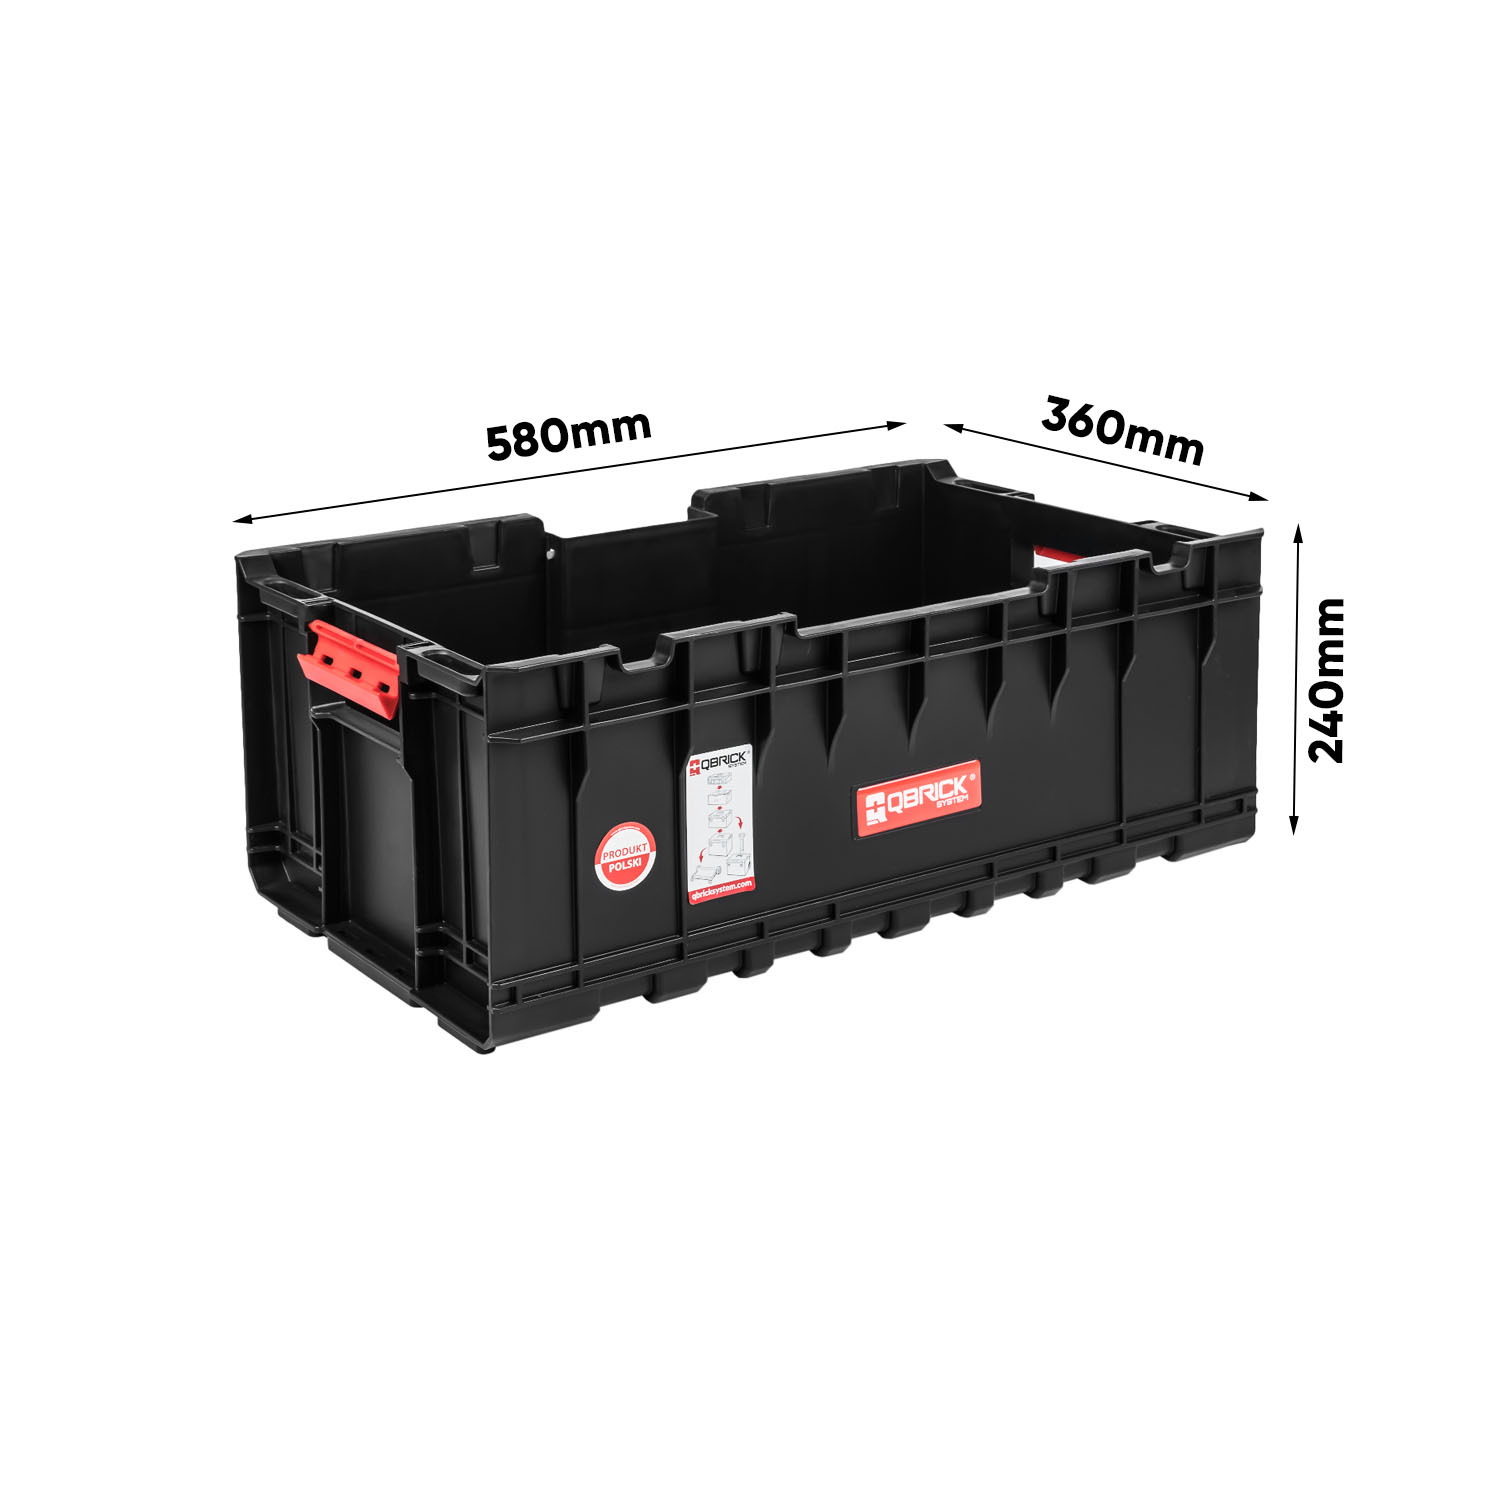 Wymiary Werkstattcontainer QS One Box Plus (1)